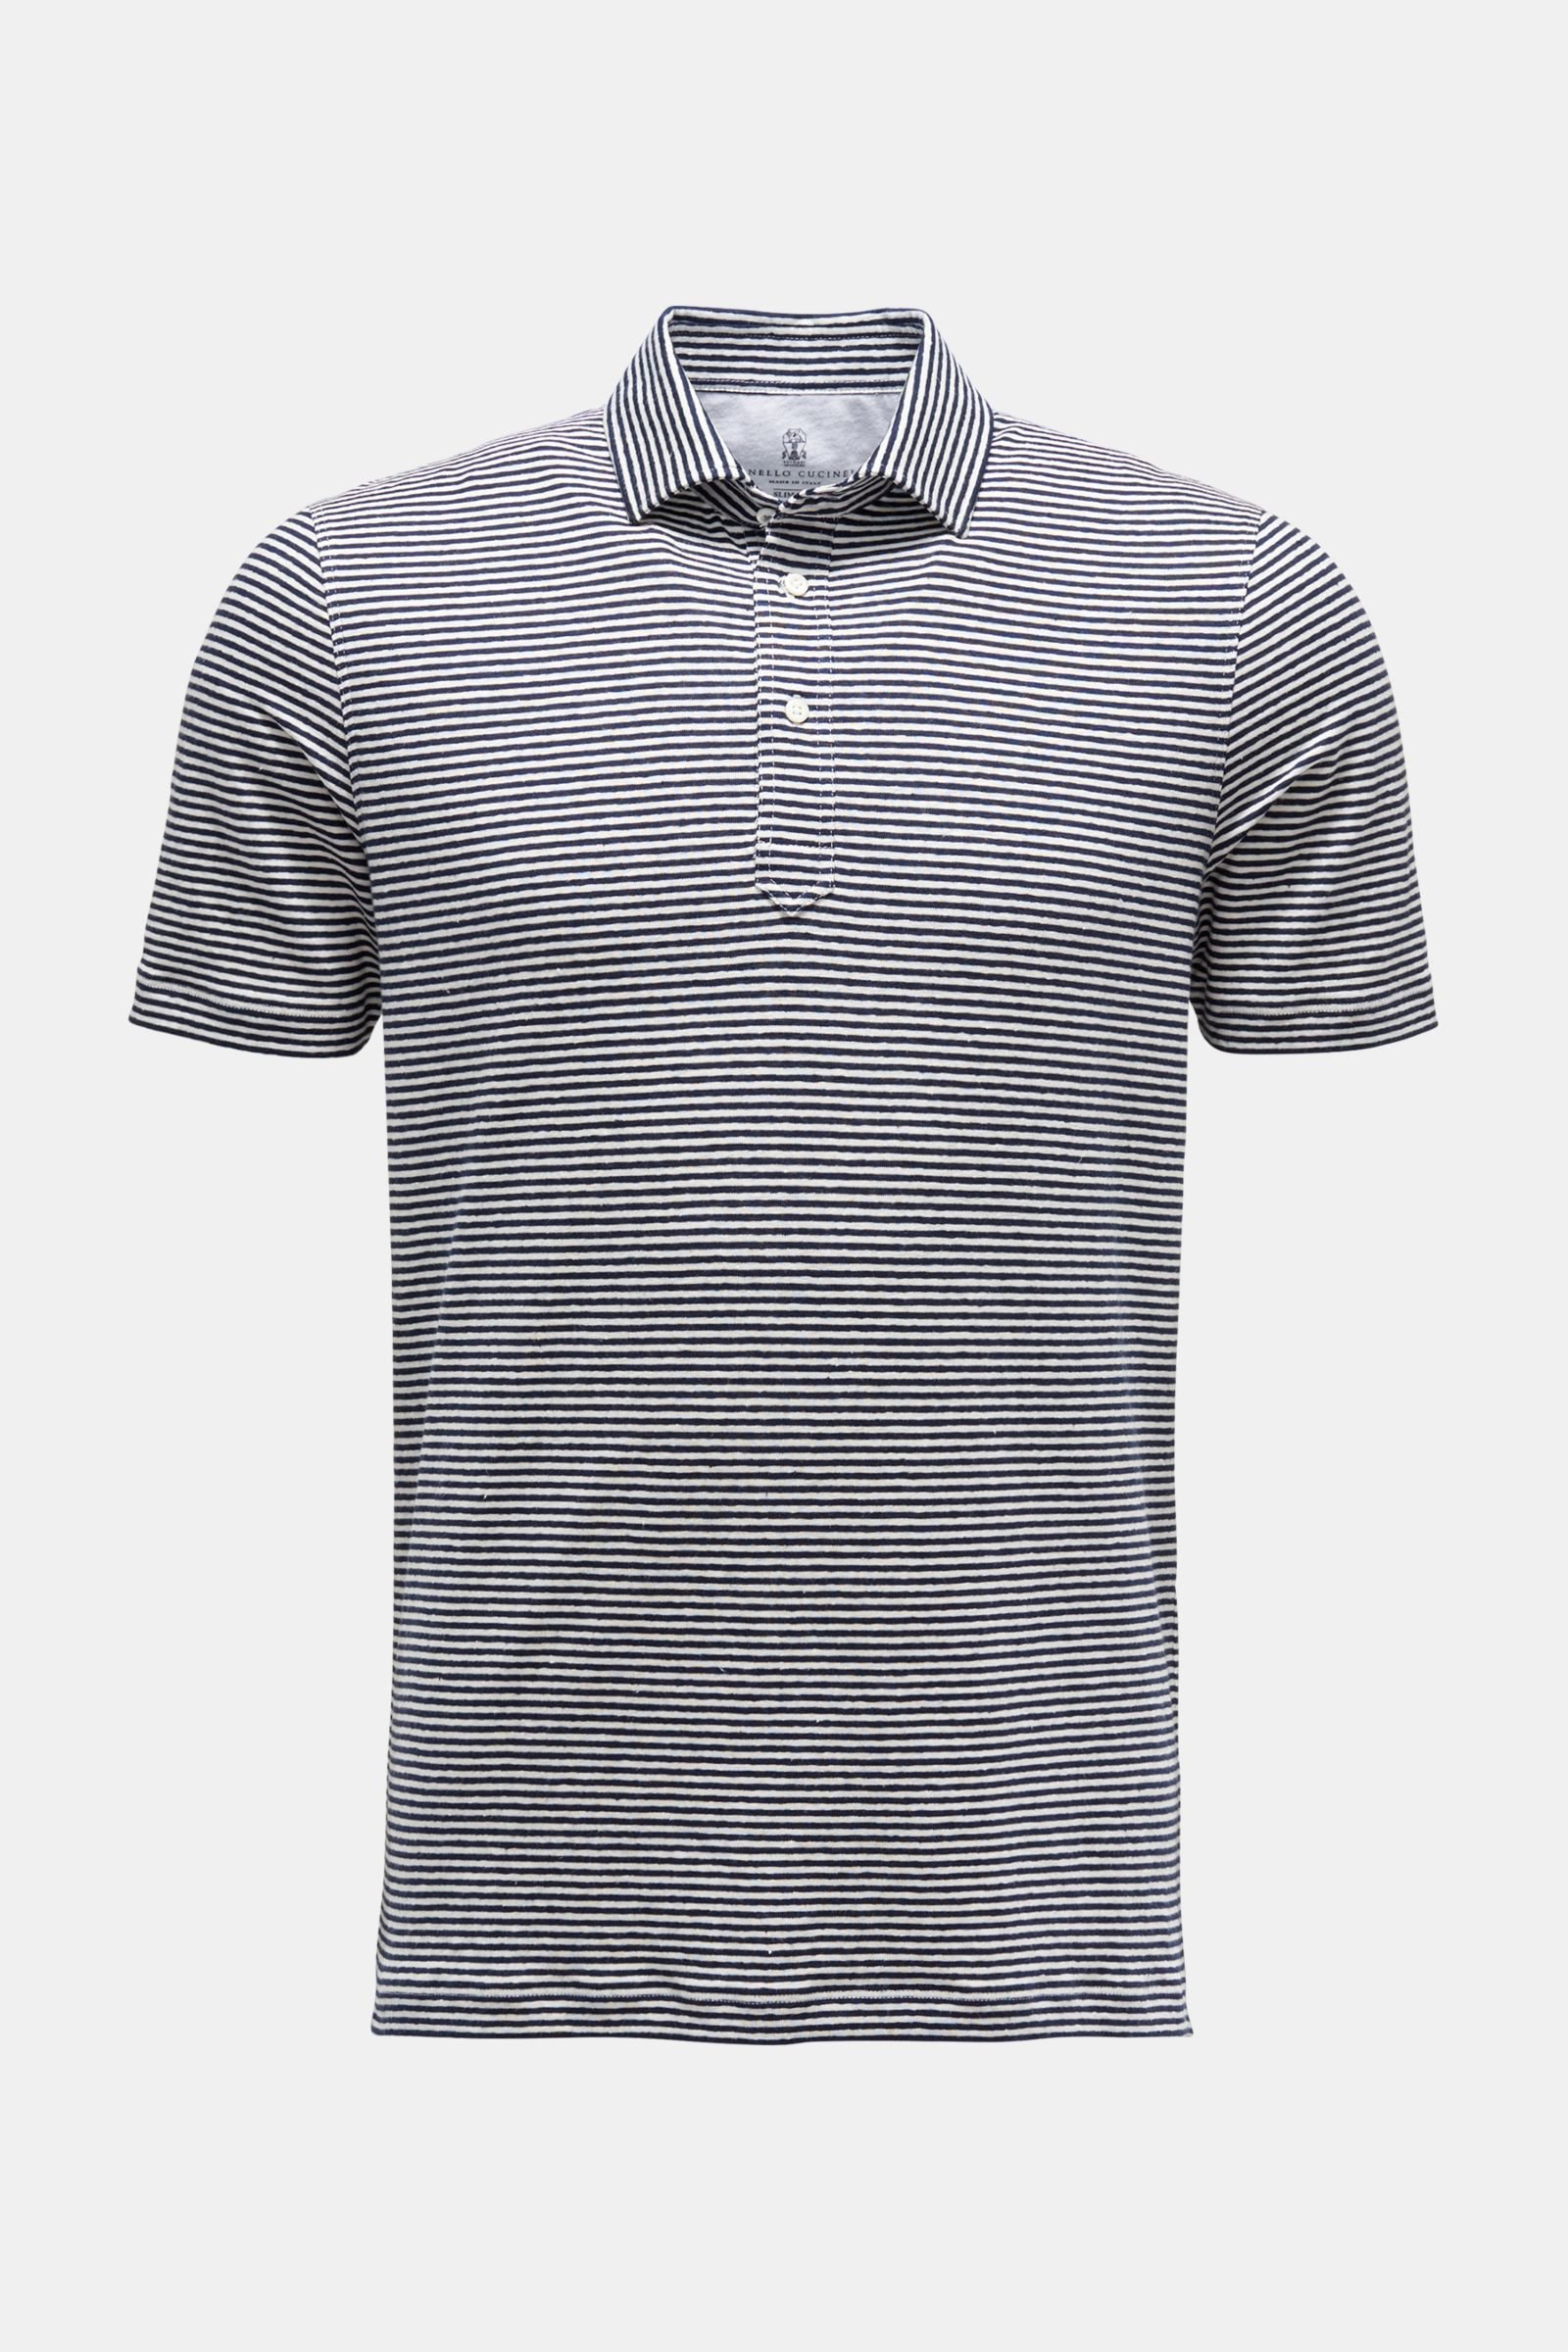 Linen polo shirt navy/white striped